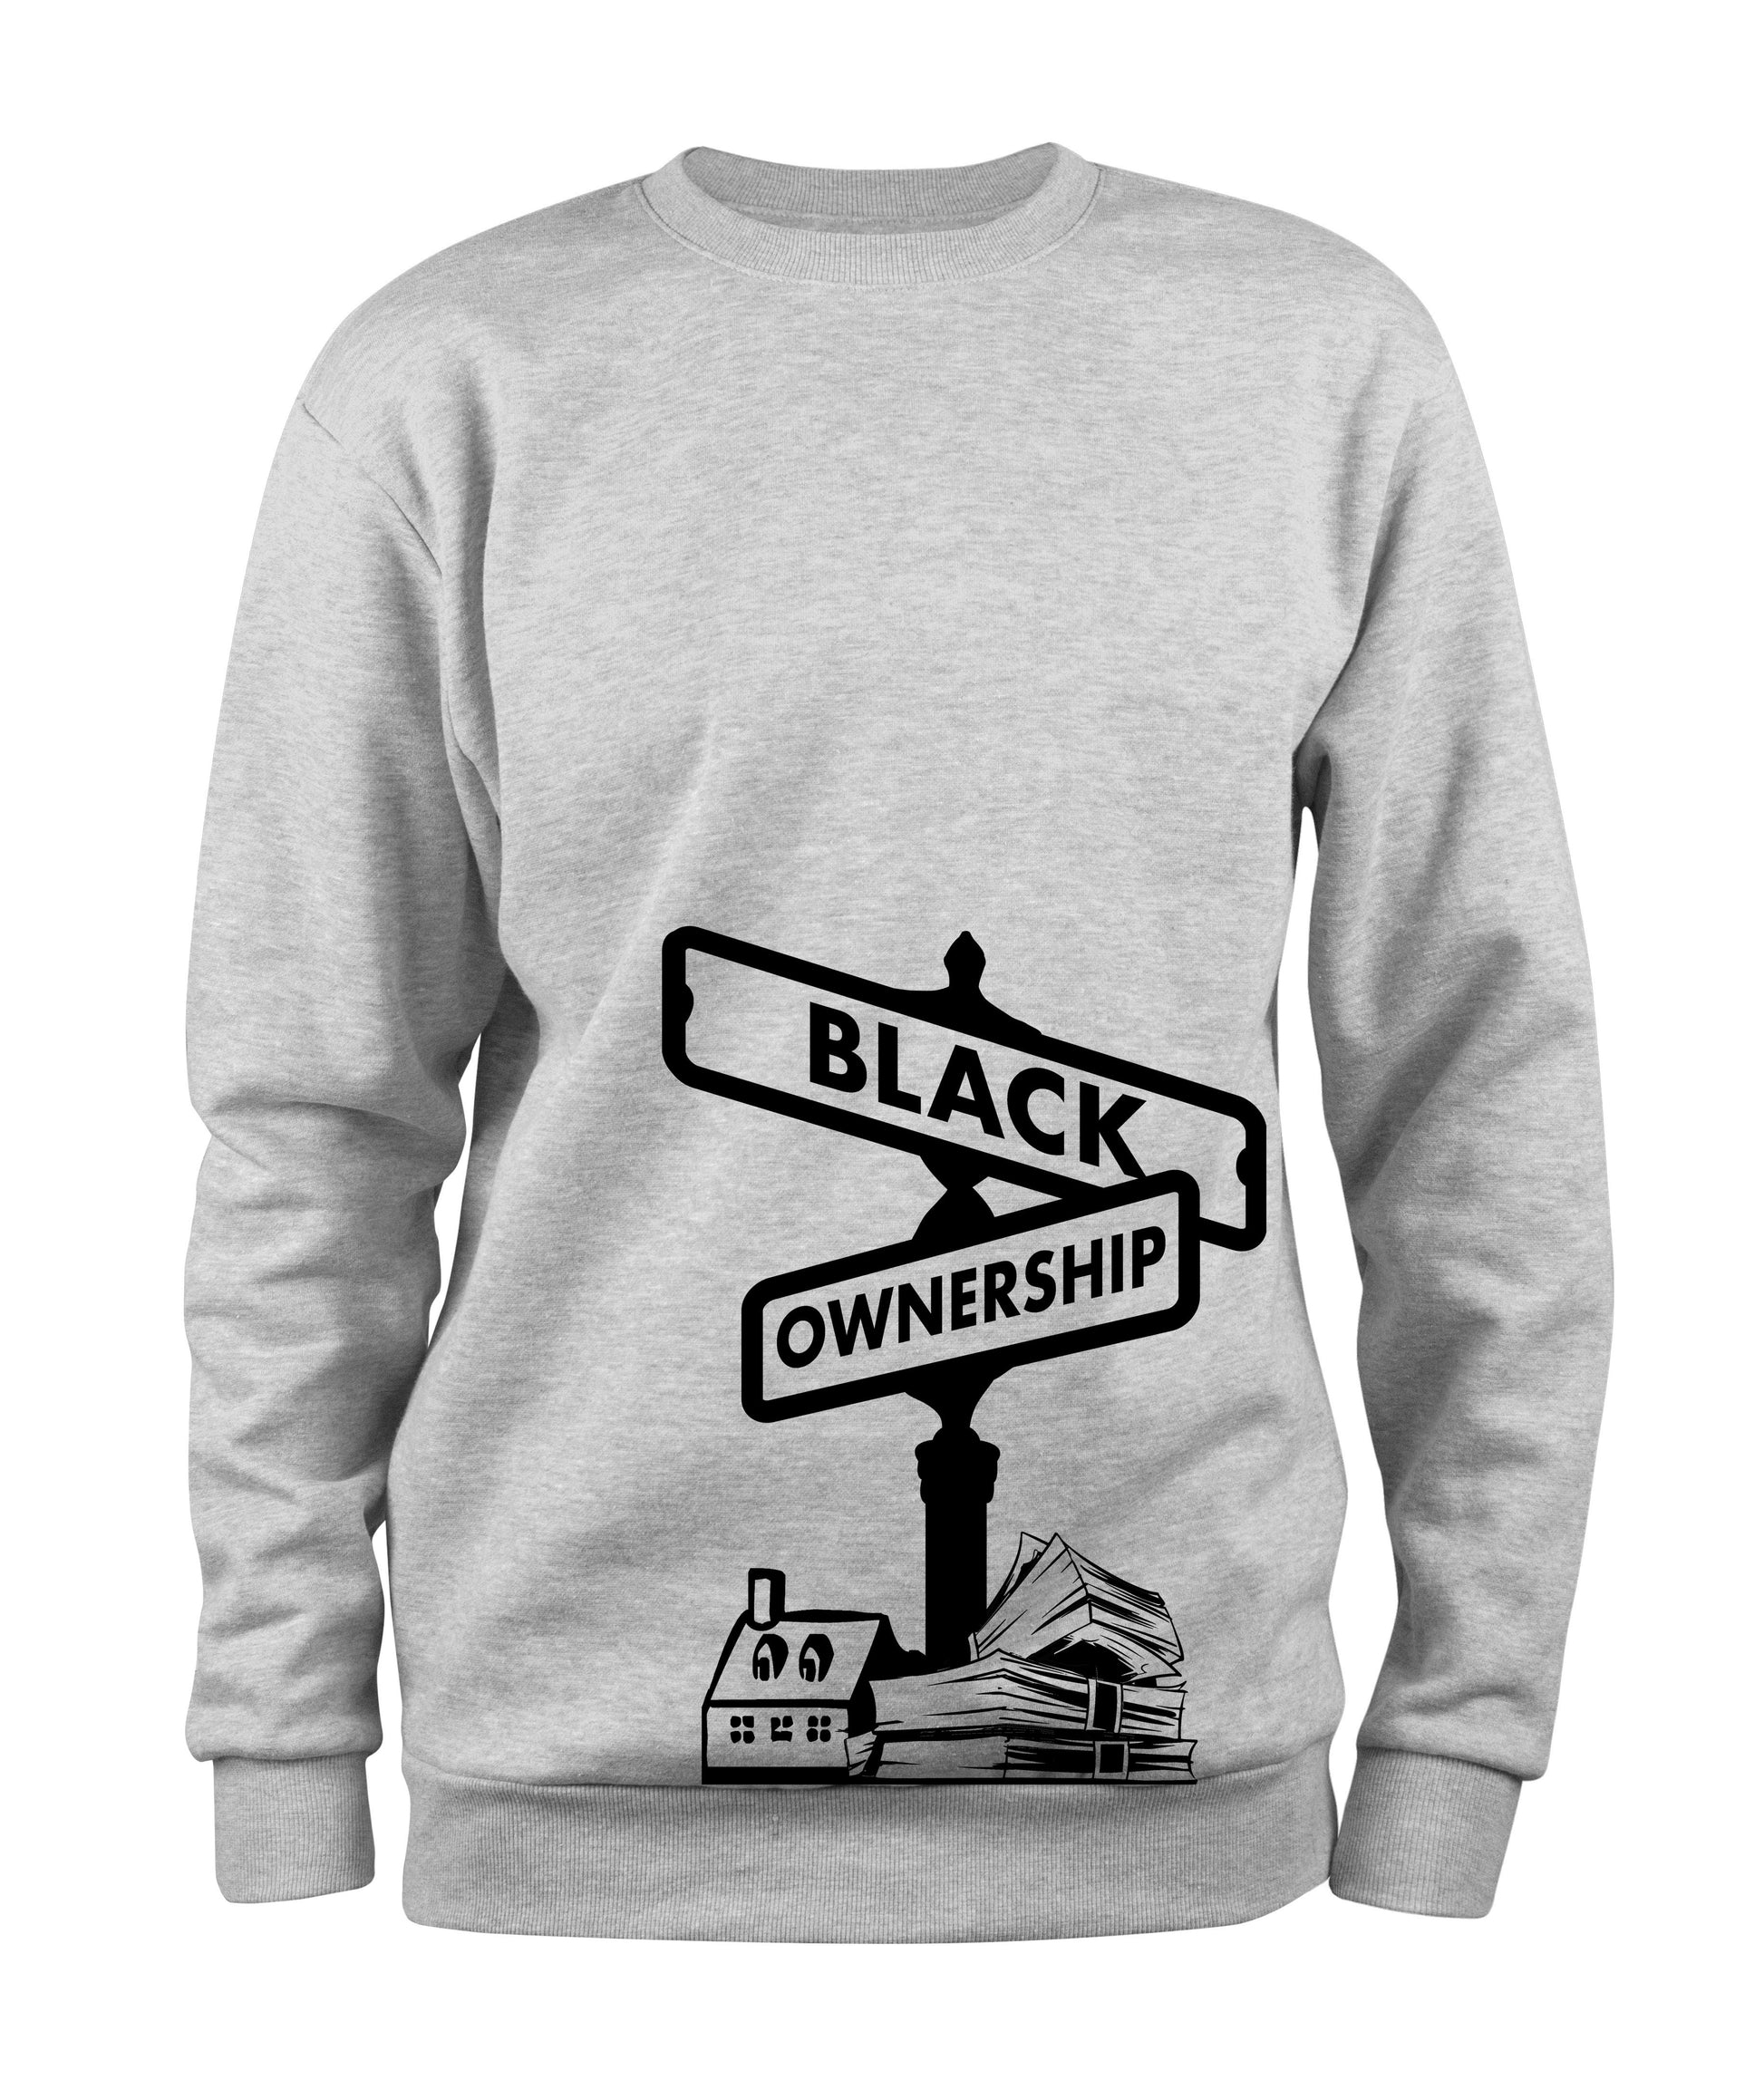 Black Ownership Sweatshirt - Black10.com